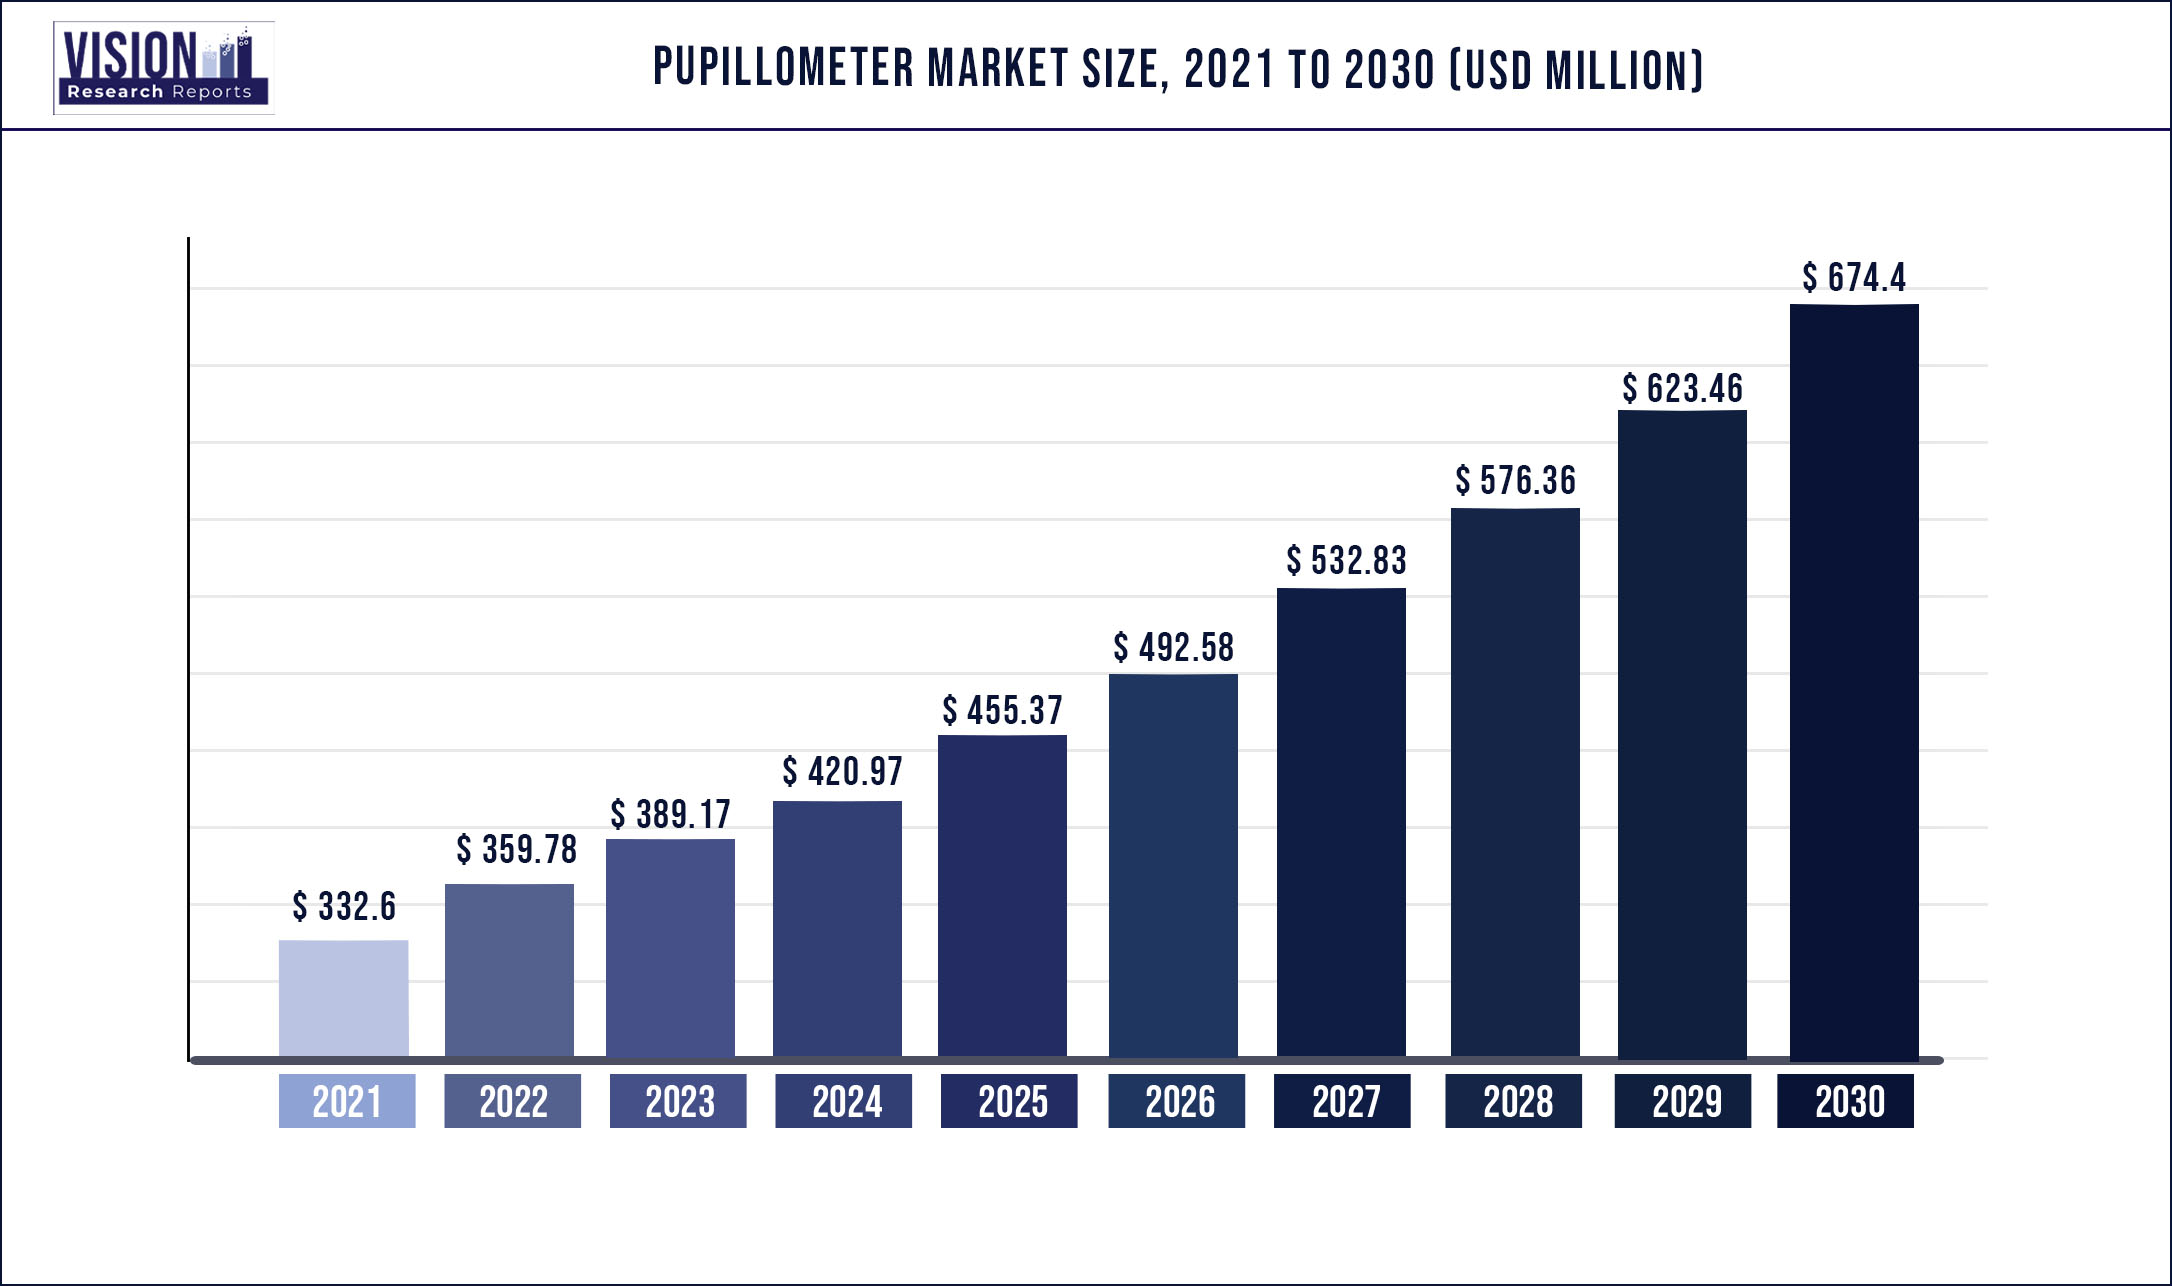 Pupillometer Market Size 2021 to 2030